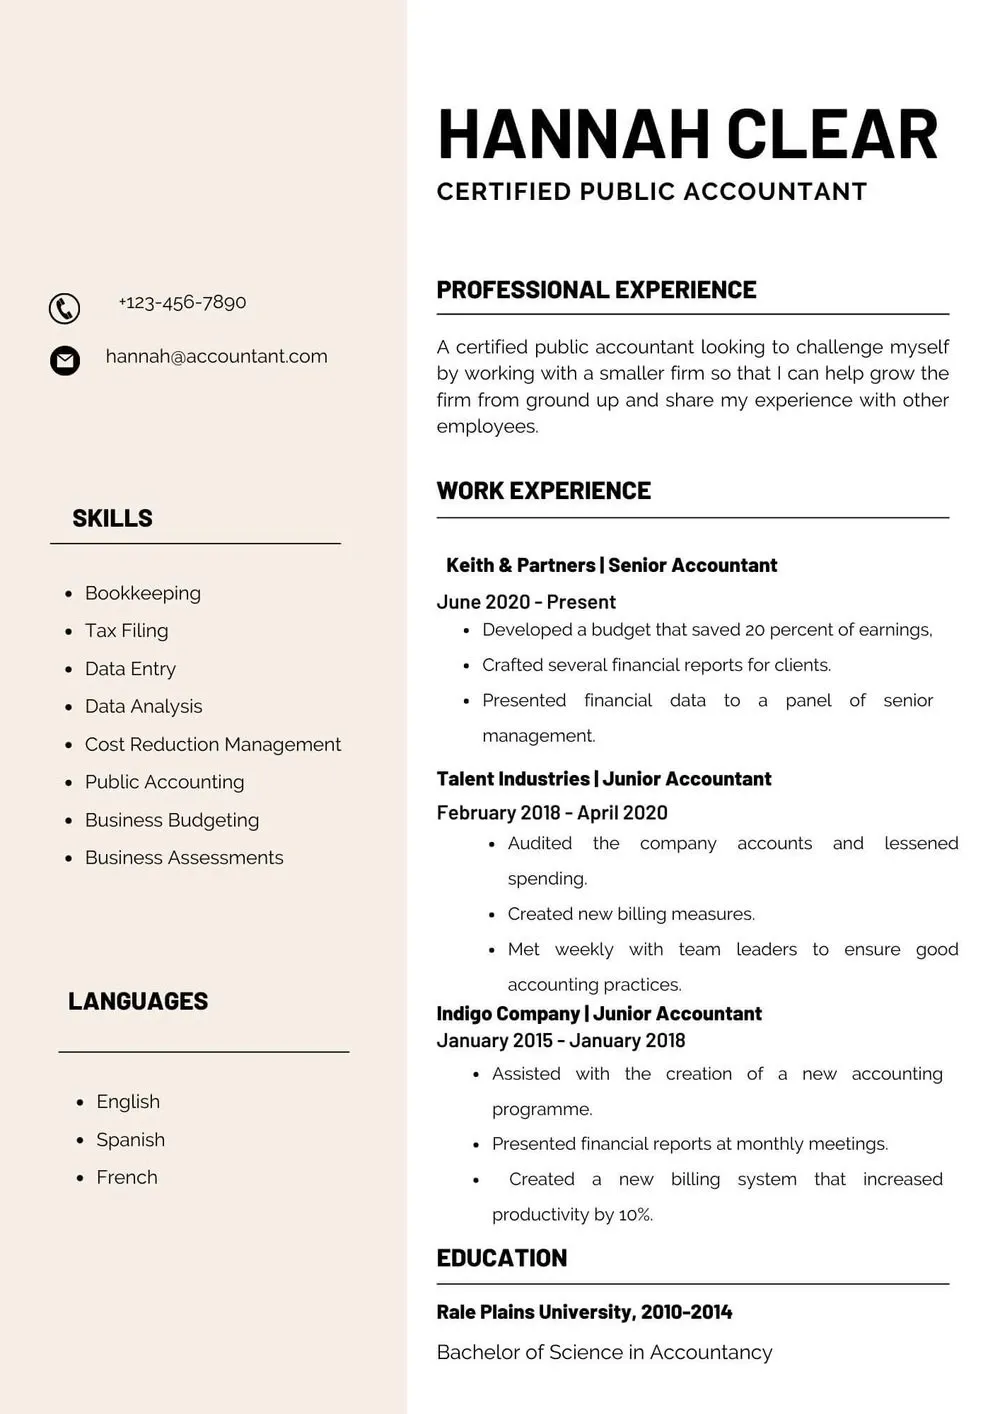 CV template for an accountant